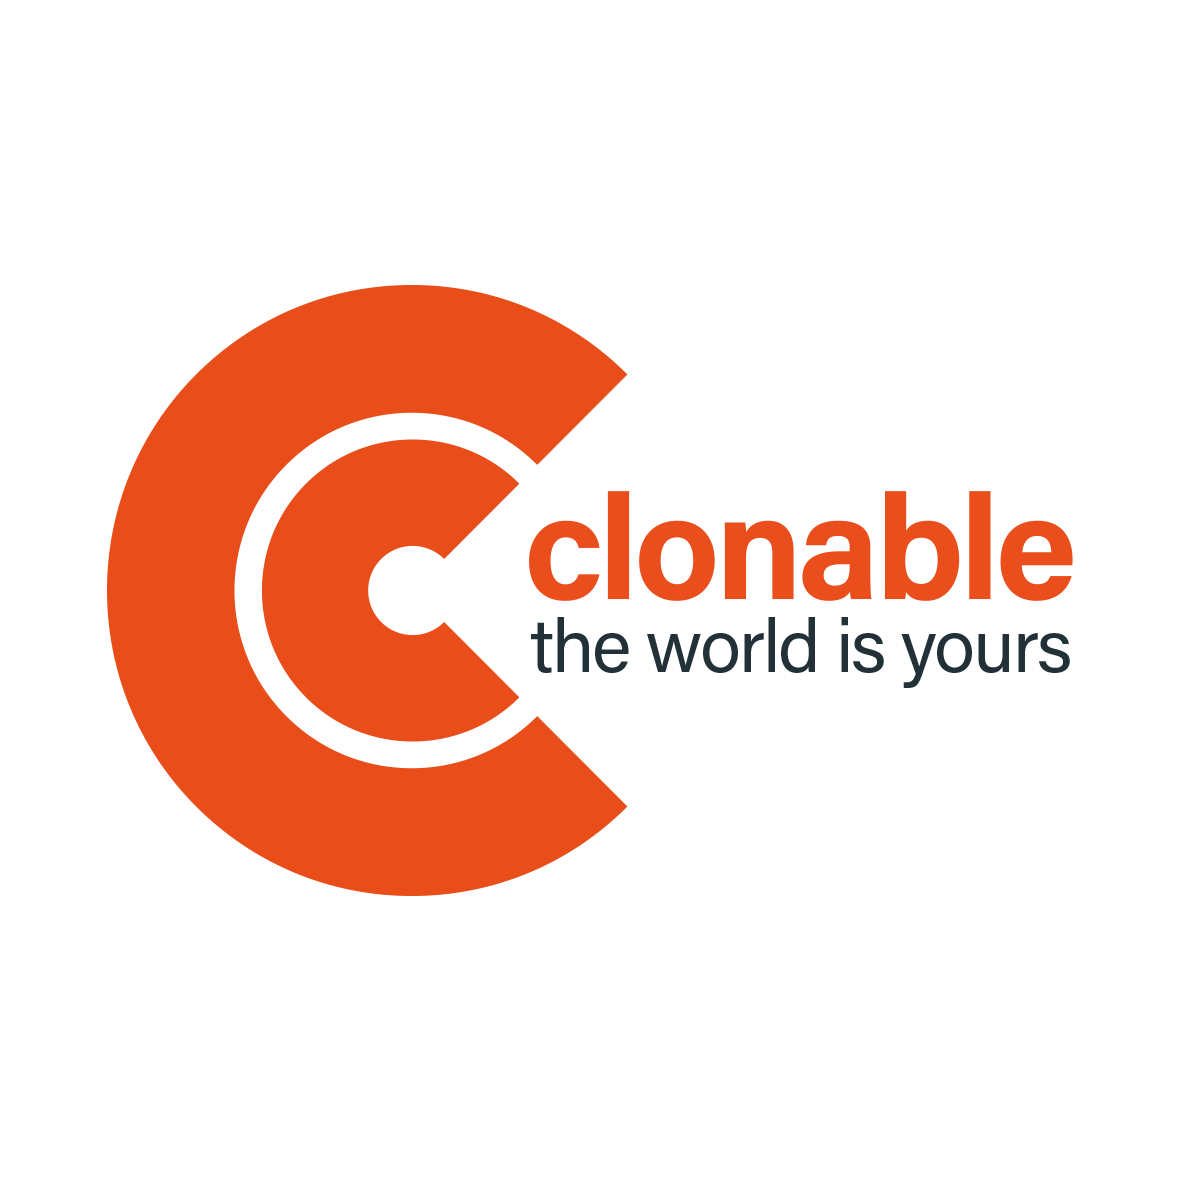 Clonable スローガン・ロゴ